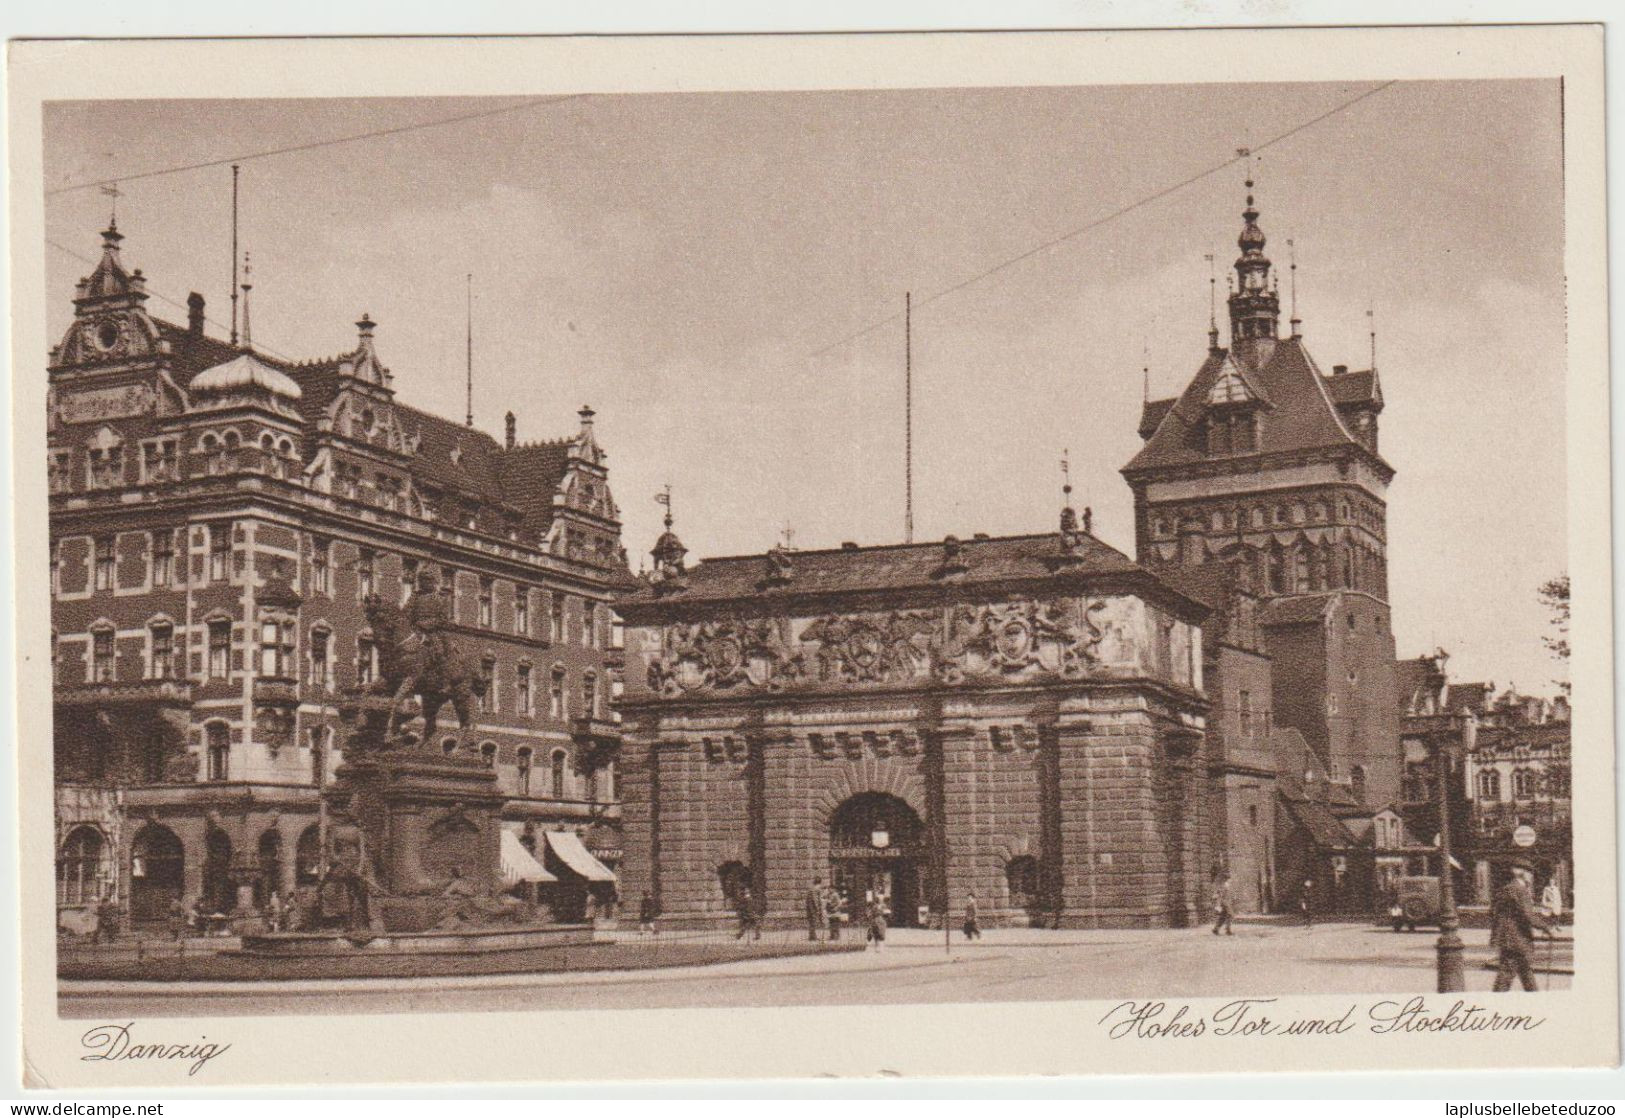 CPA - POLOGNE - GDANSK - DANZIG - Hohes Tor Und Stockturm - Vers 1930 - Poland